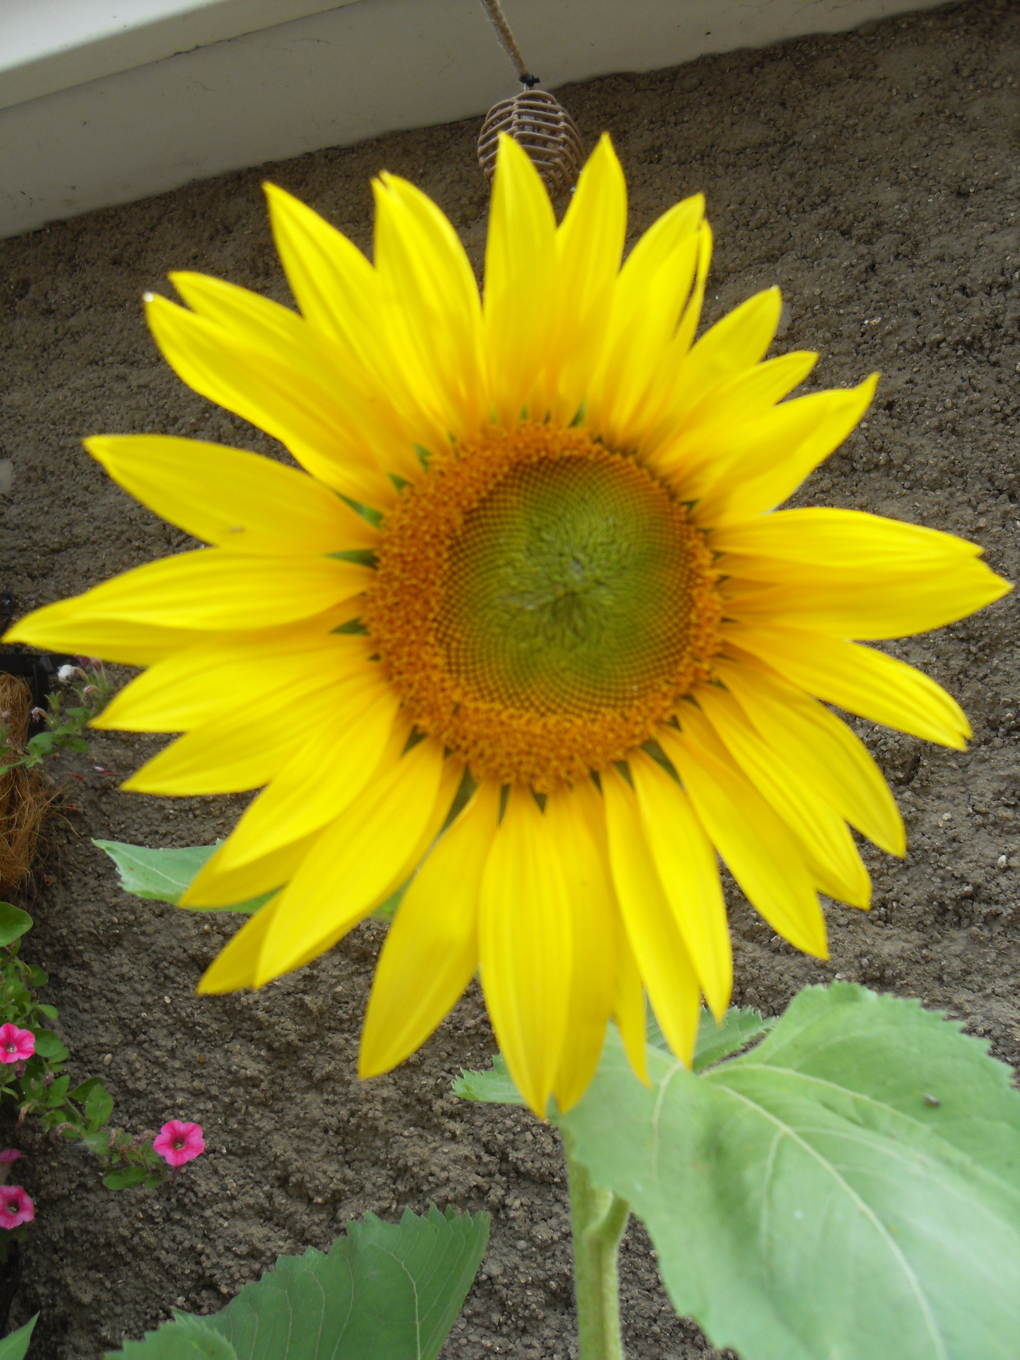 A single sunflower bloom